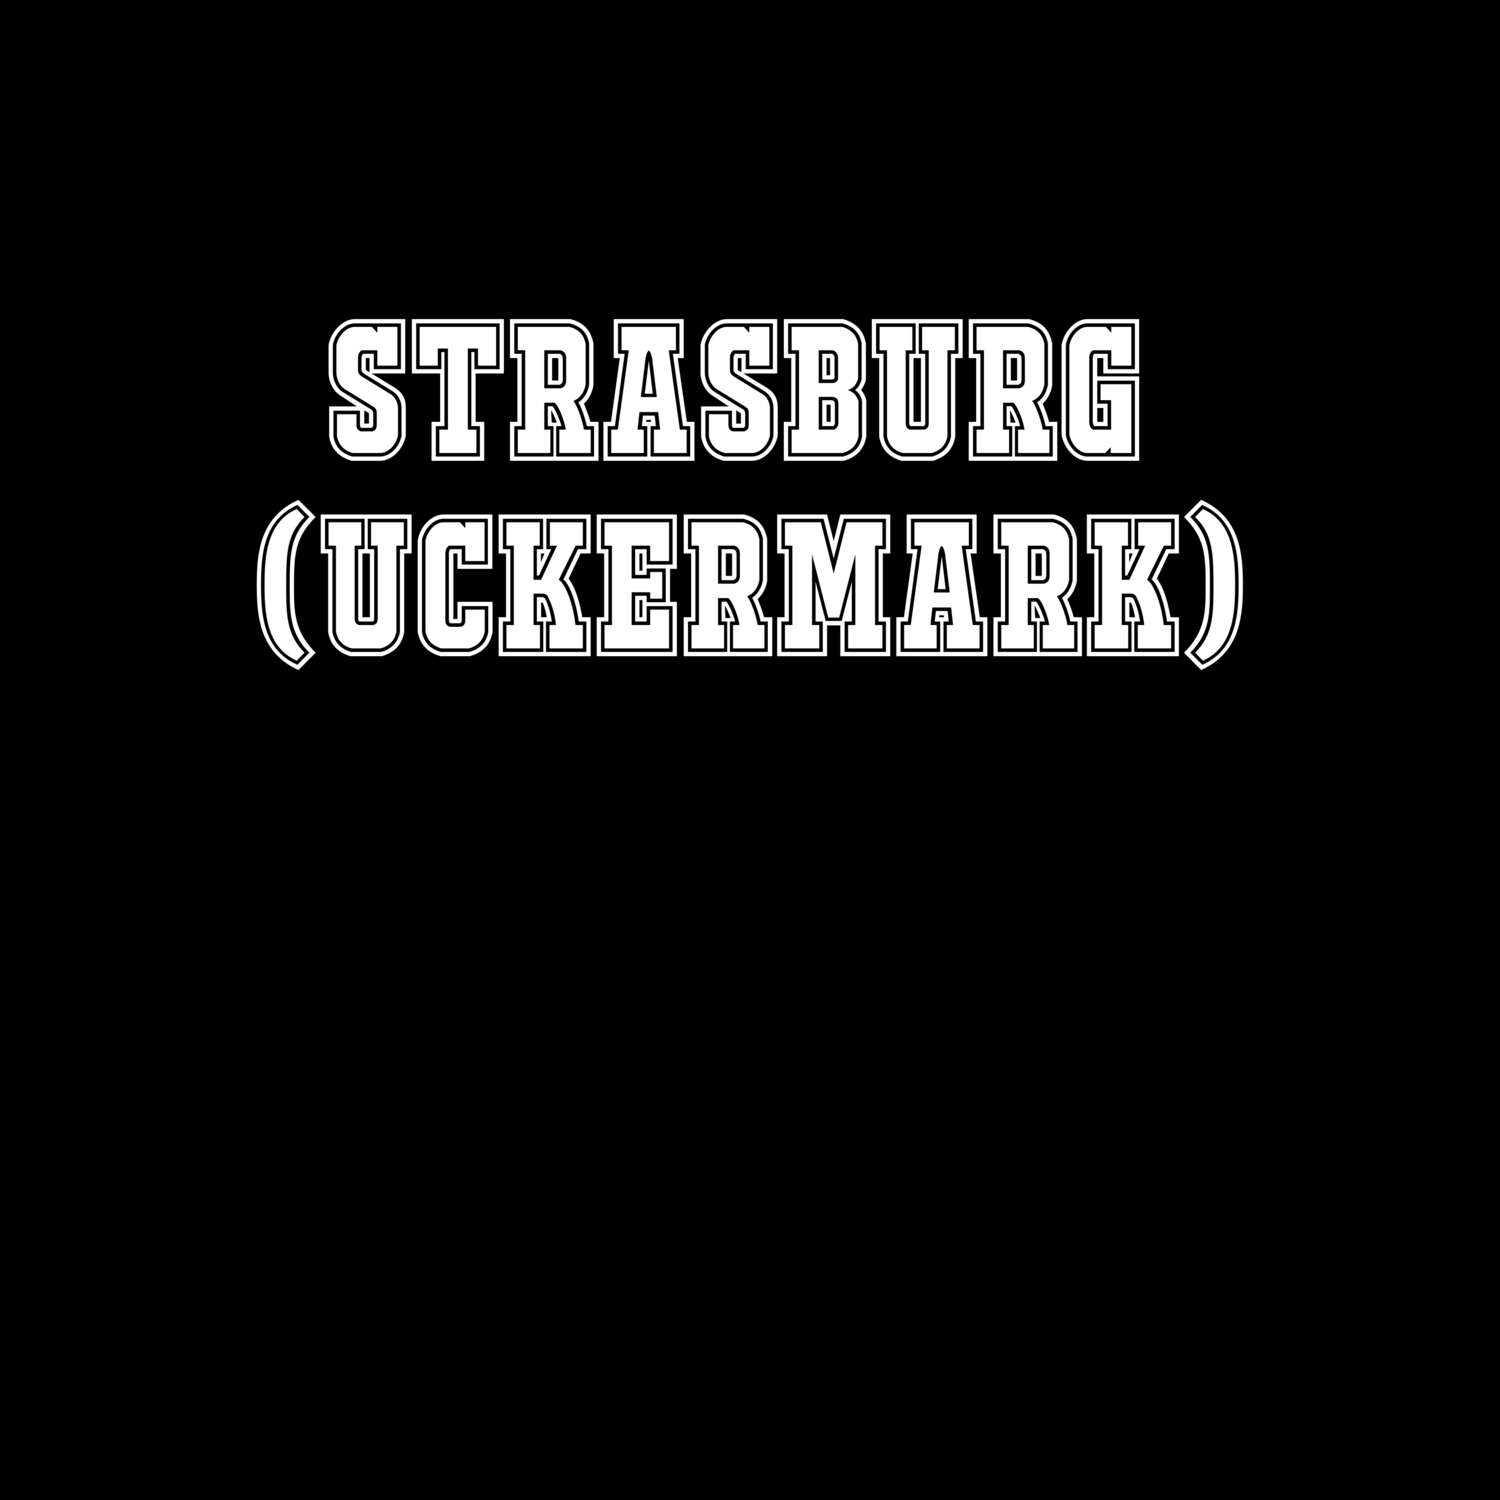 Strasburg (Uckermark) T-Shirt »Classic«